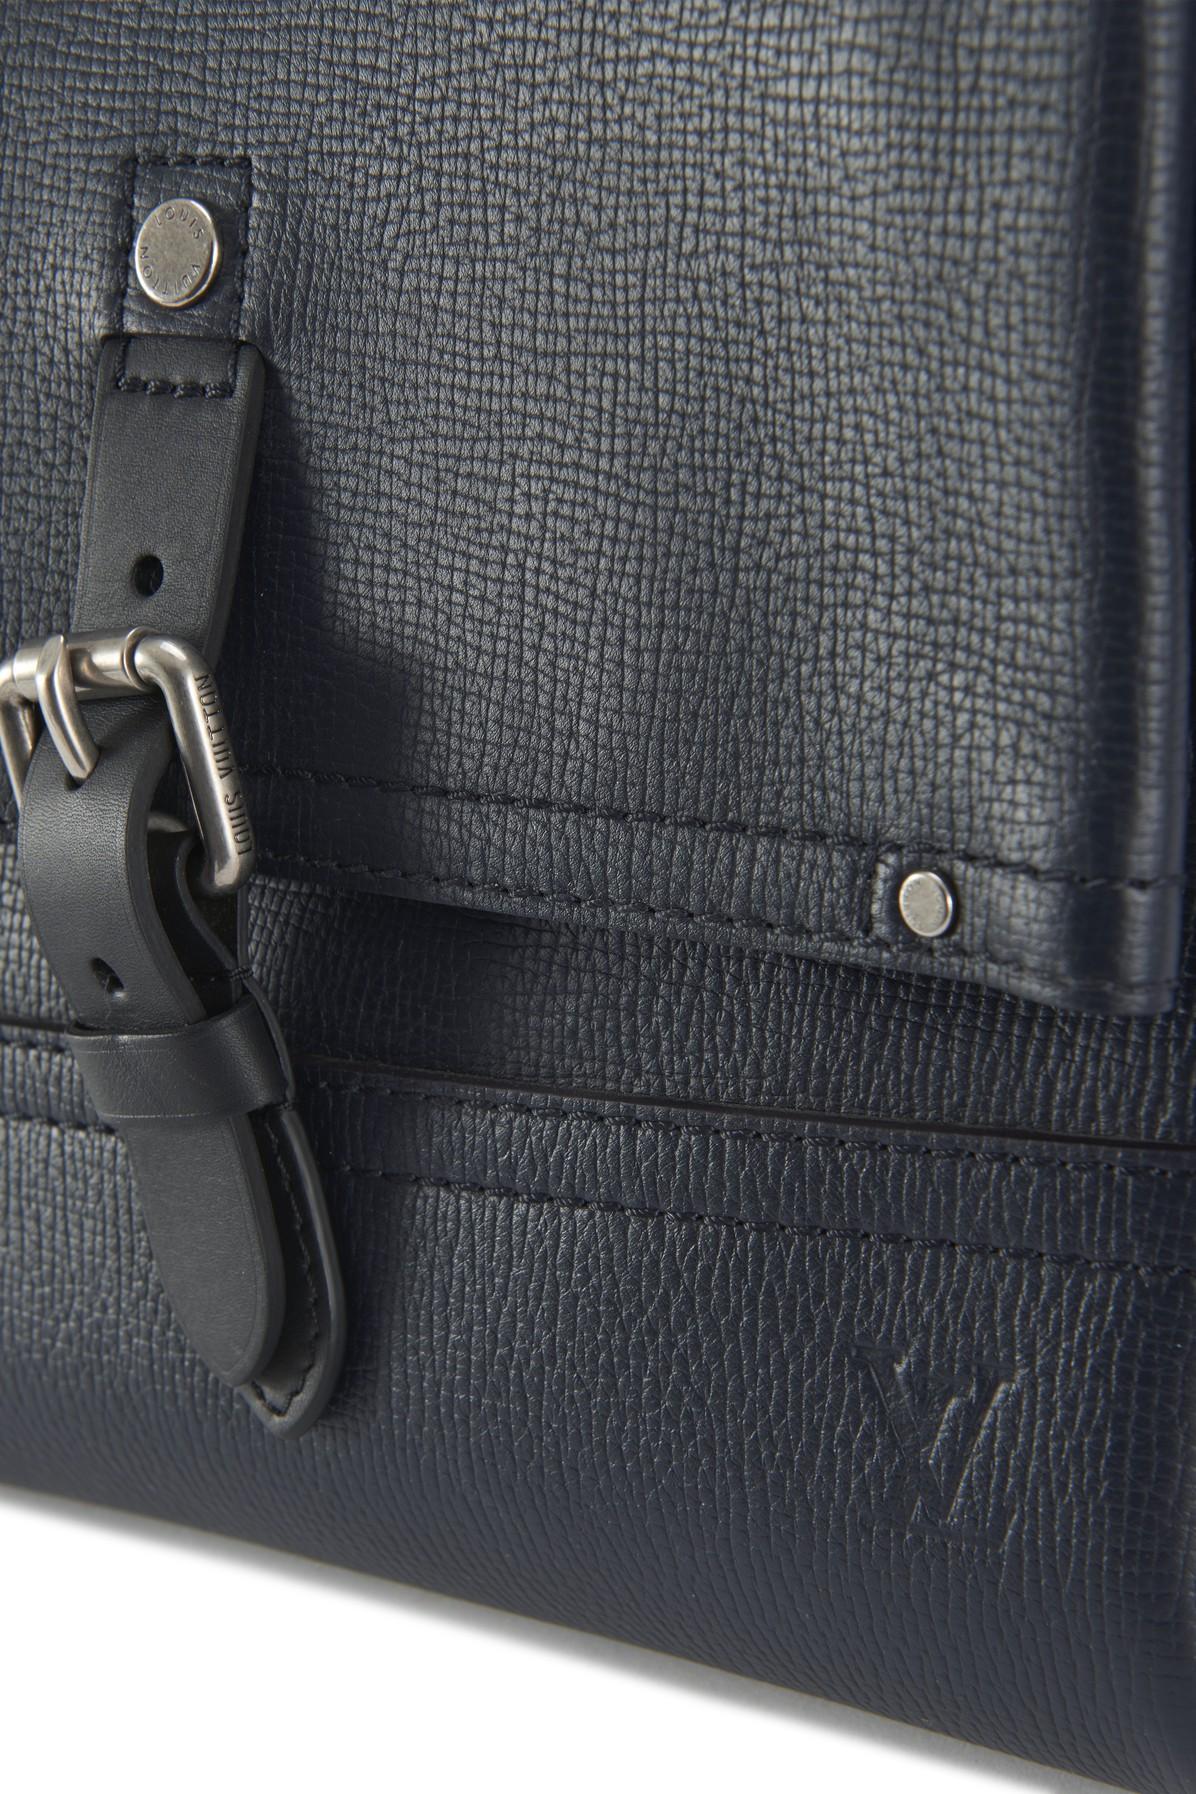 Louis Vuitton Handbags for sale in Virgin, Utah